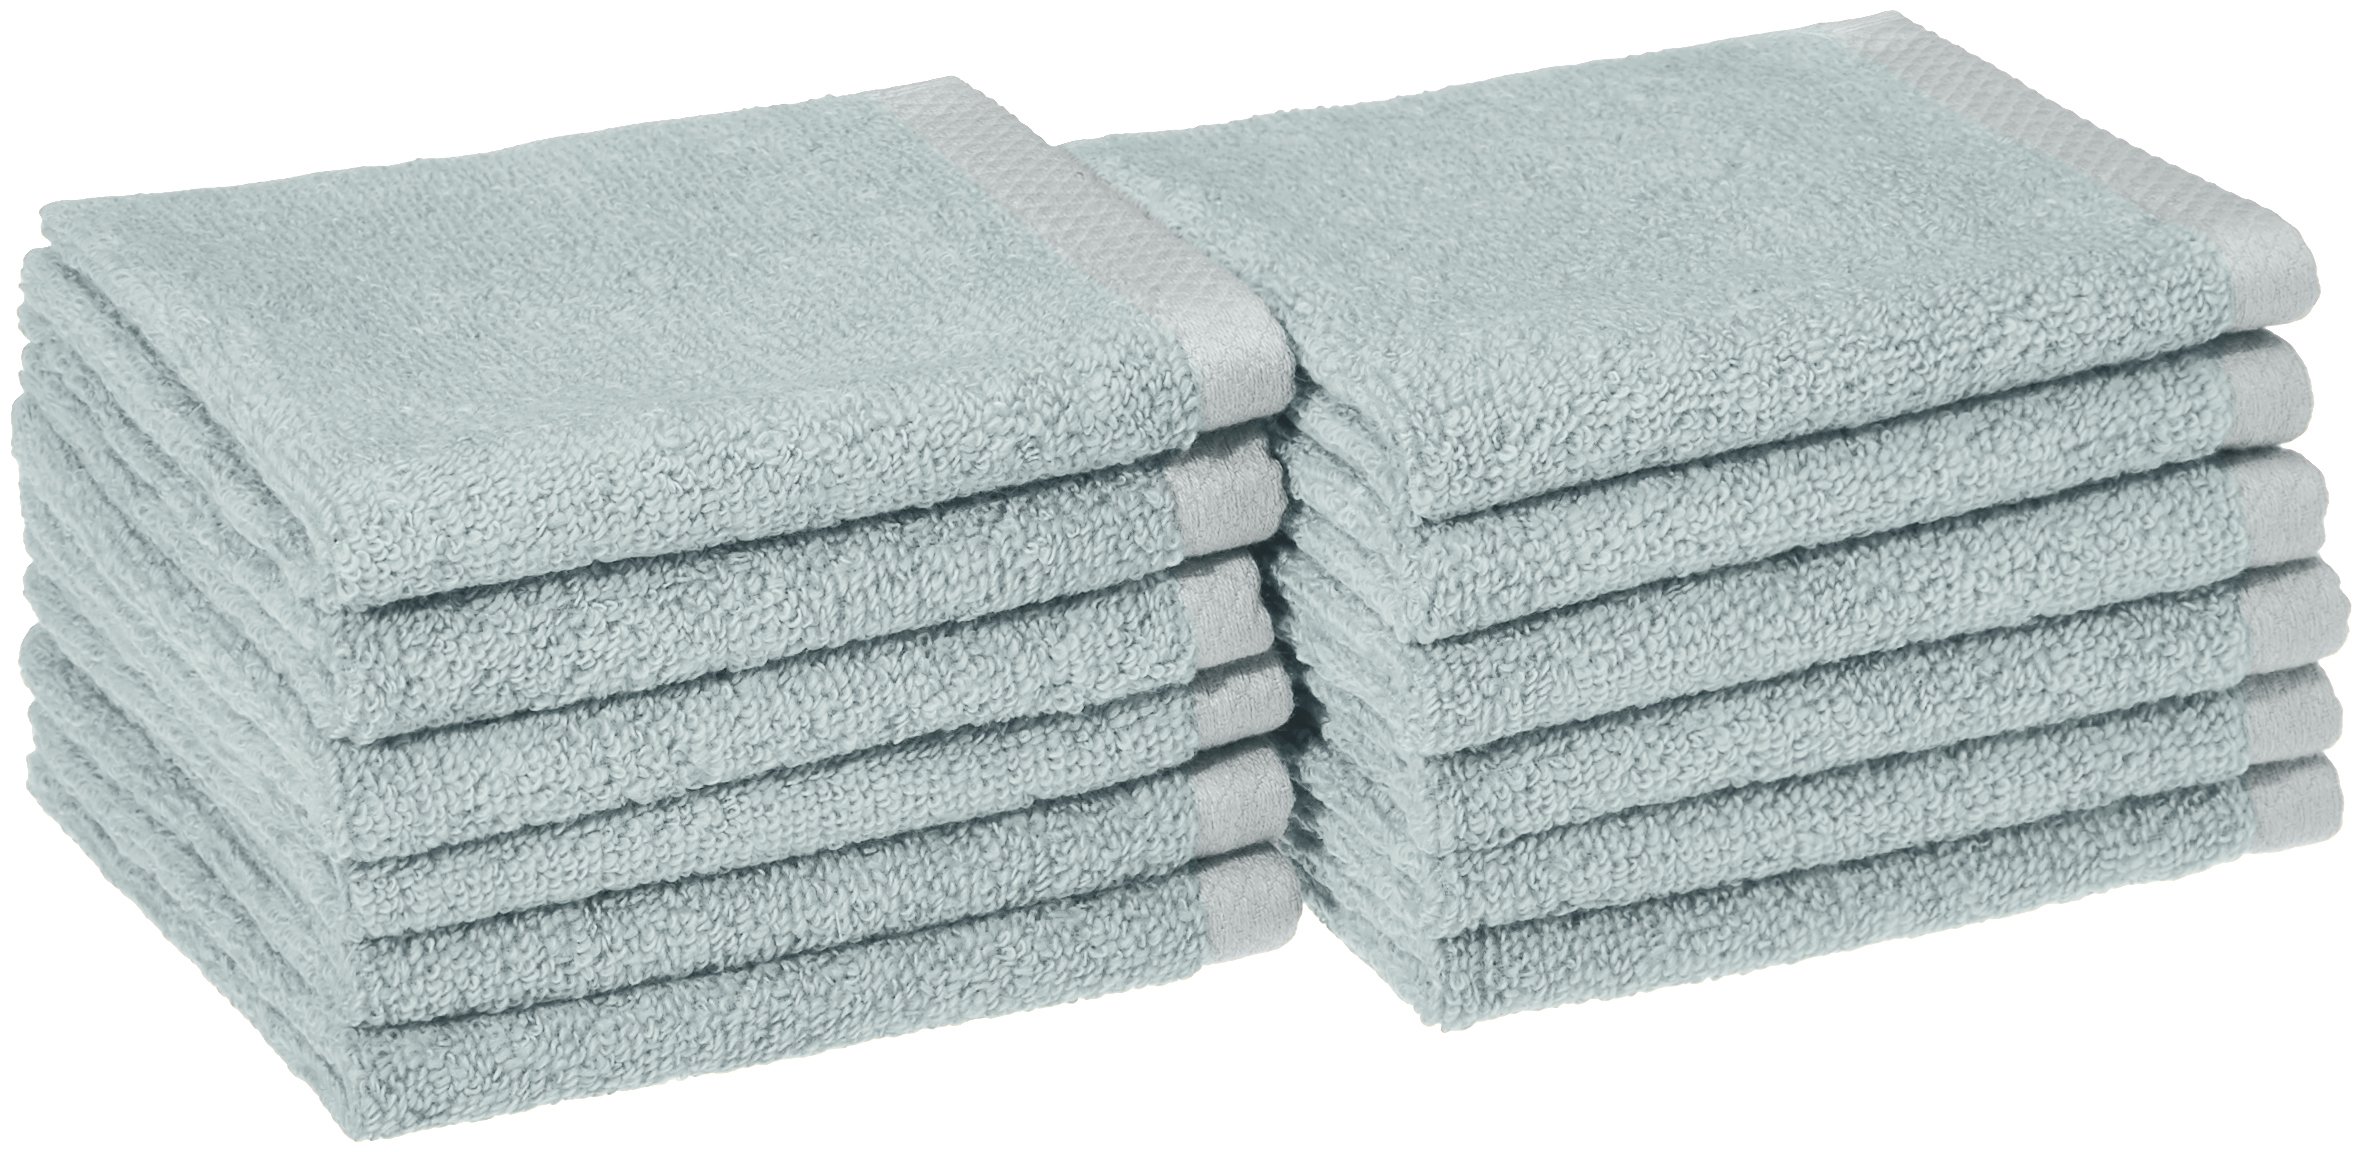 Book Cover Amazon Basics Quick-Dry Washcloth - 100% Cotton, 12-Pack, Ice Blue Ice Blue Washcloth